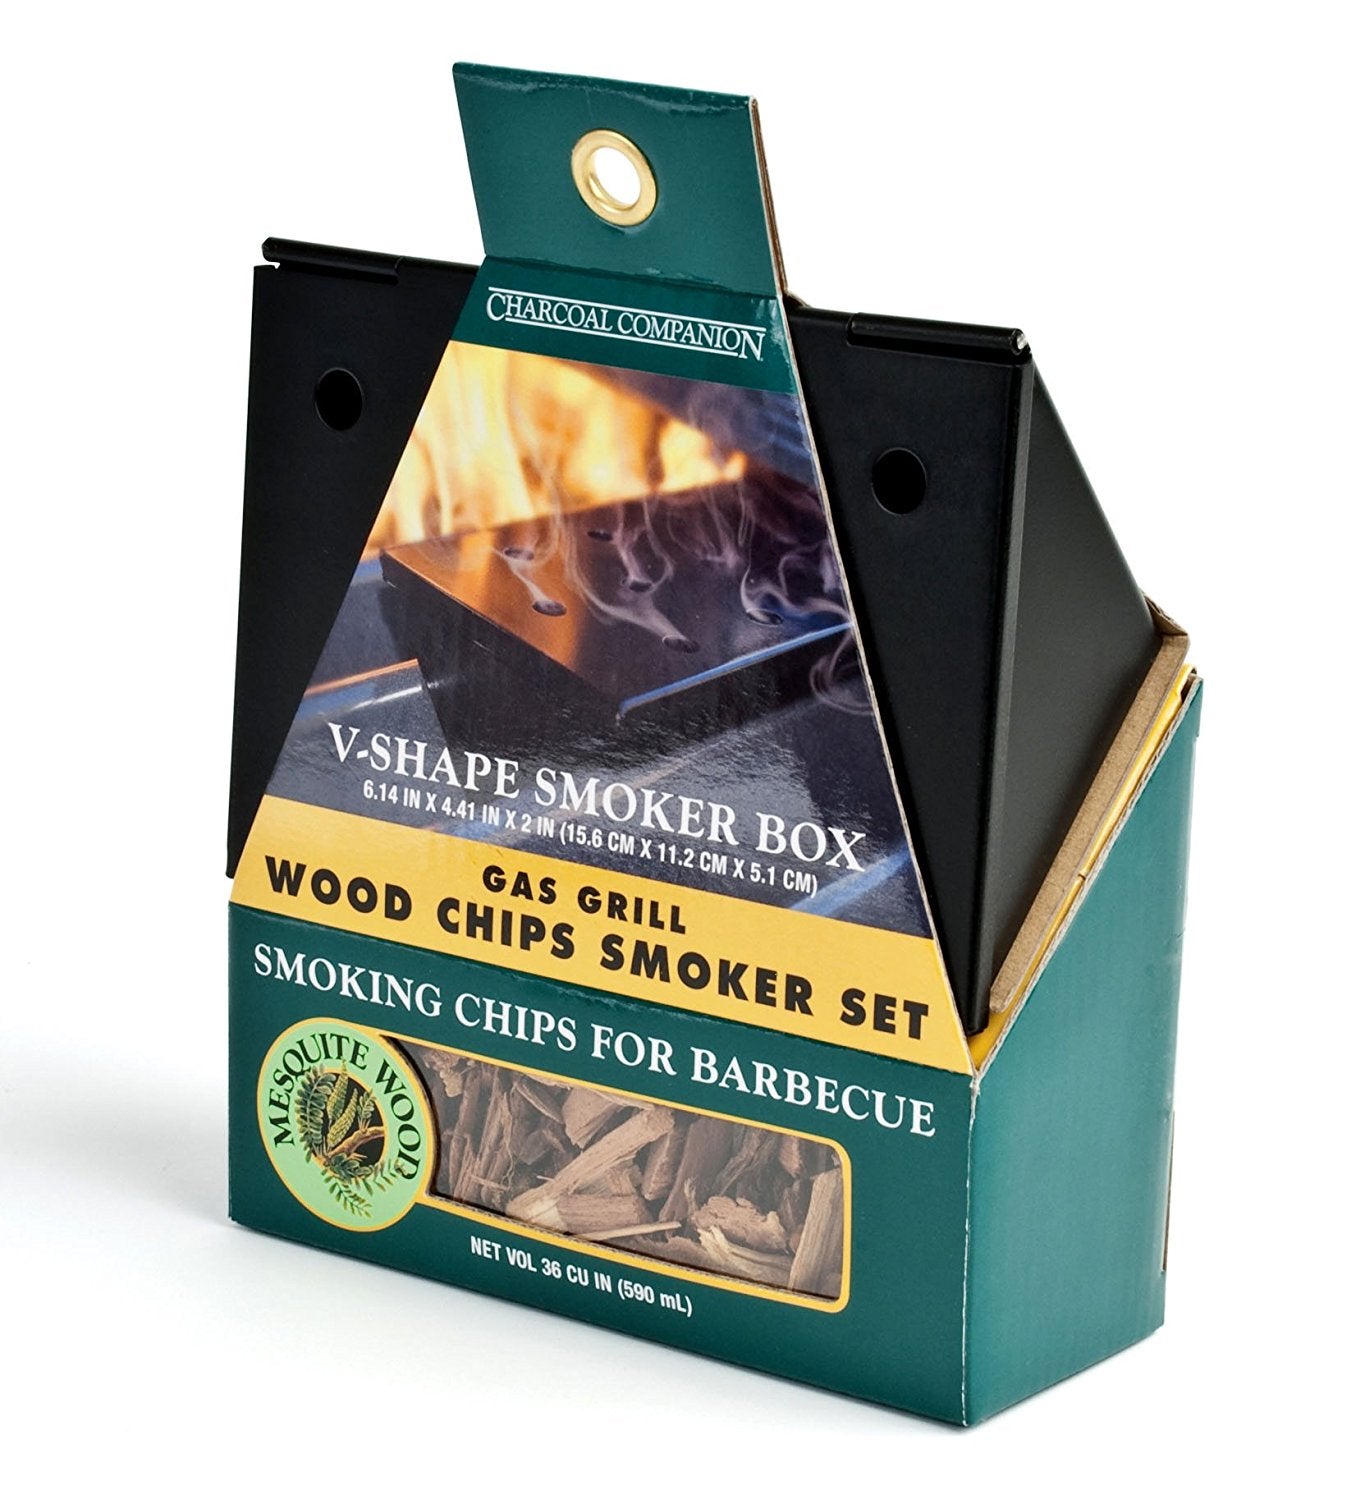 Charcoal Companion V Shaped Smoker Set w/Smoking Chips